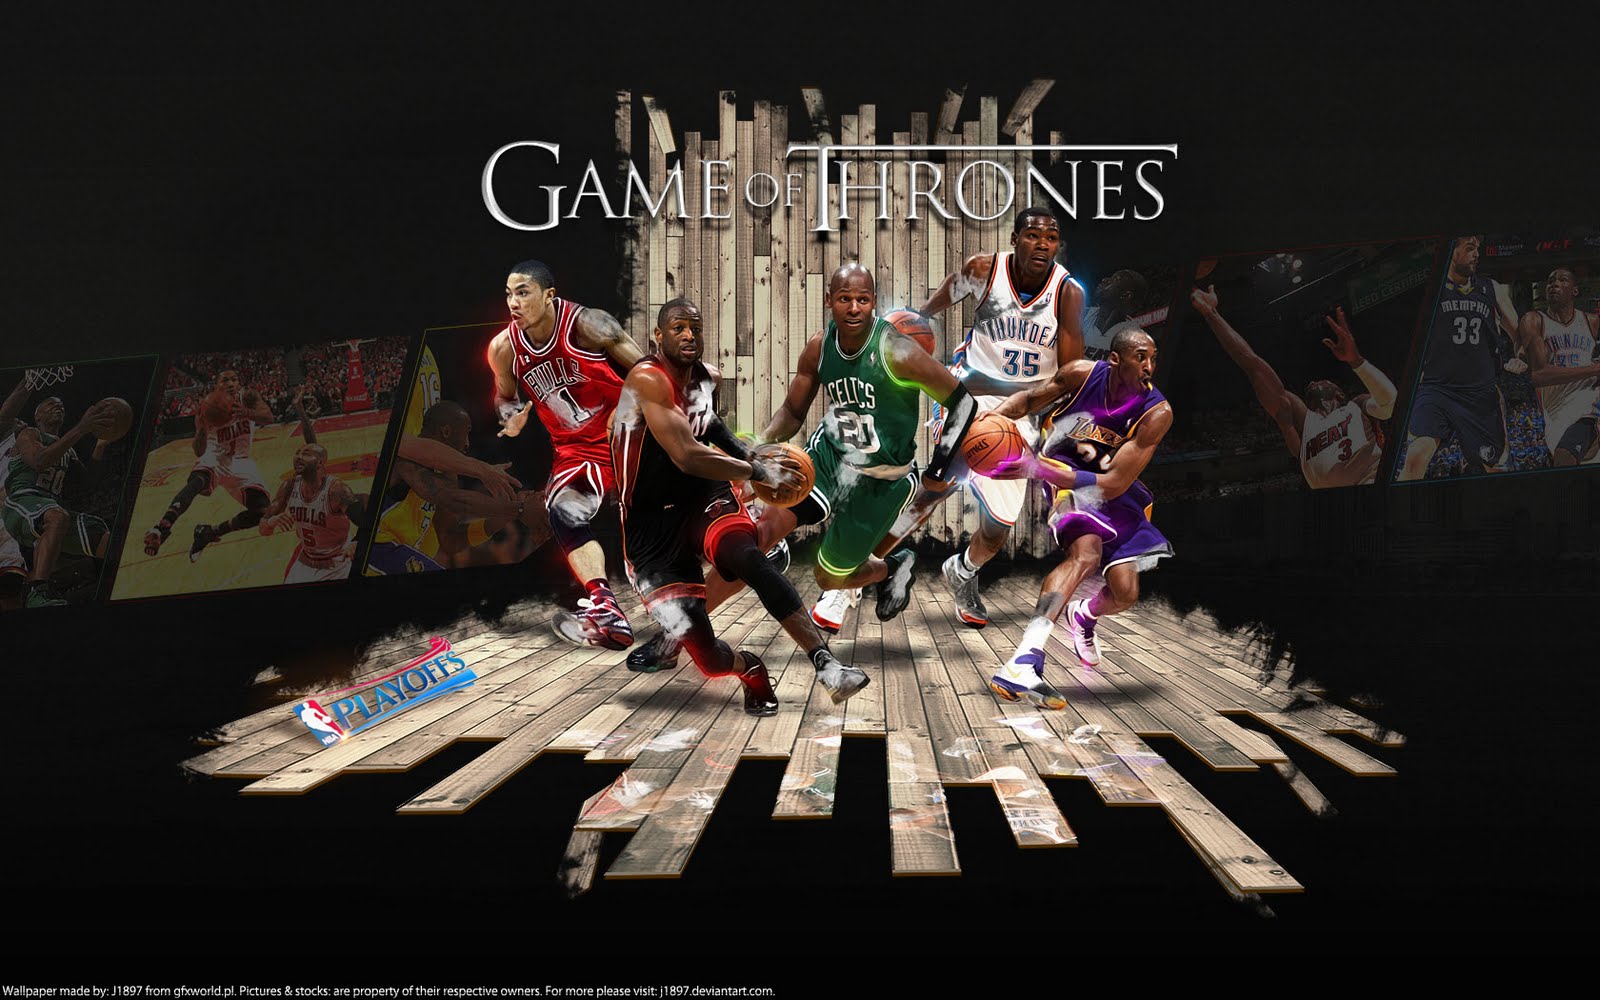 https://blogger.googleusercontent.com/img/b/R29vZ2xl/AVvXsEg4S54kA7UHNZI9Je4sXyVAo0tTDnNZgFcMU9R2sPLi8kolrbYALimajkb7T4GvDxeZPCODVJ6Ck2FU0PWGLemGIqJorVLDCLryhS-rW1aqlzKXdn34d8R1H-c2F3zBF3yjdYwJi6oYBa8f/s1600/2011-NBA-Playoffs-Game-Of-Thrones-Widescree-Wallpaper.jpg